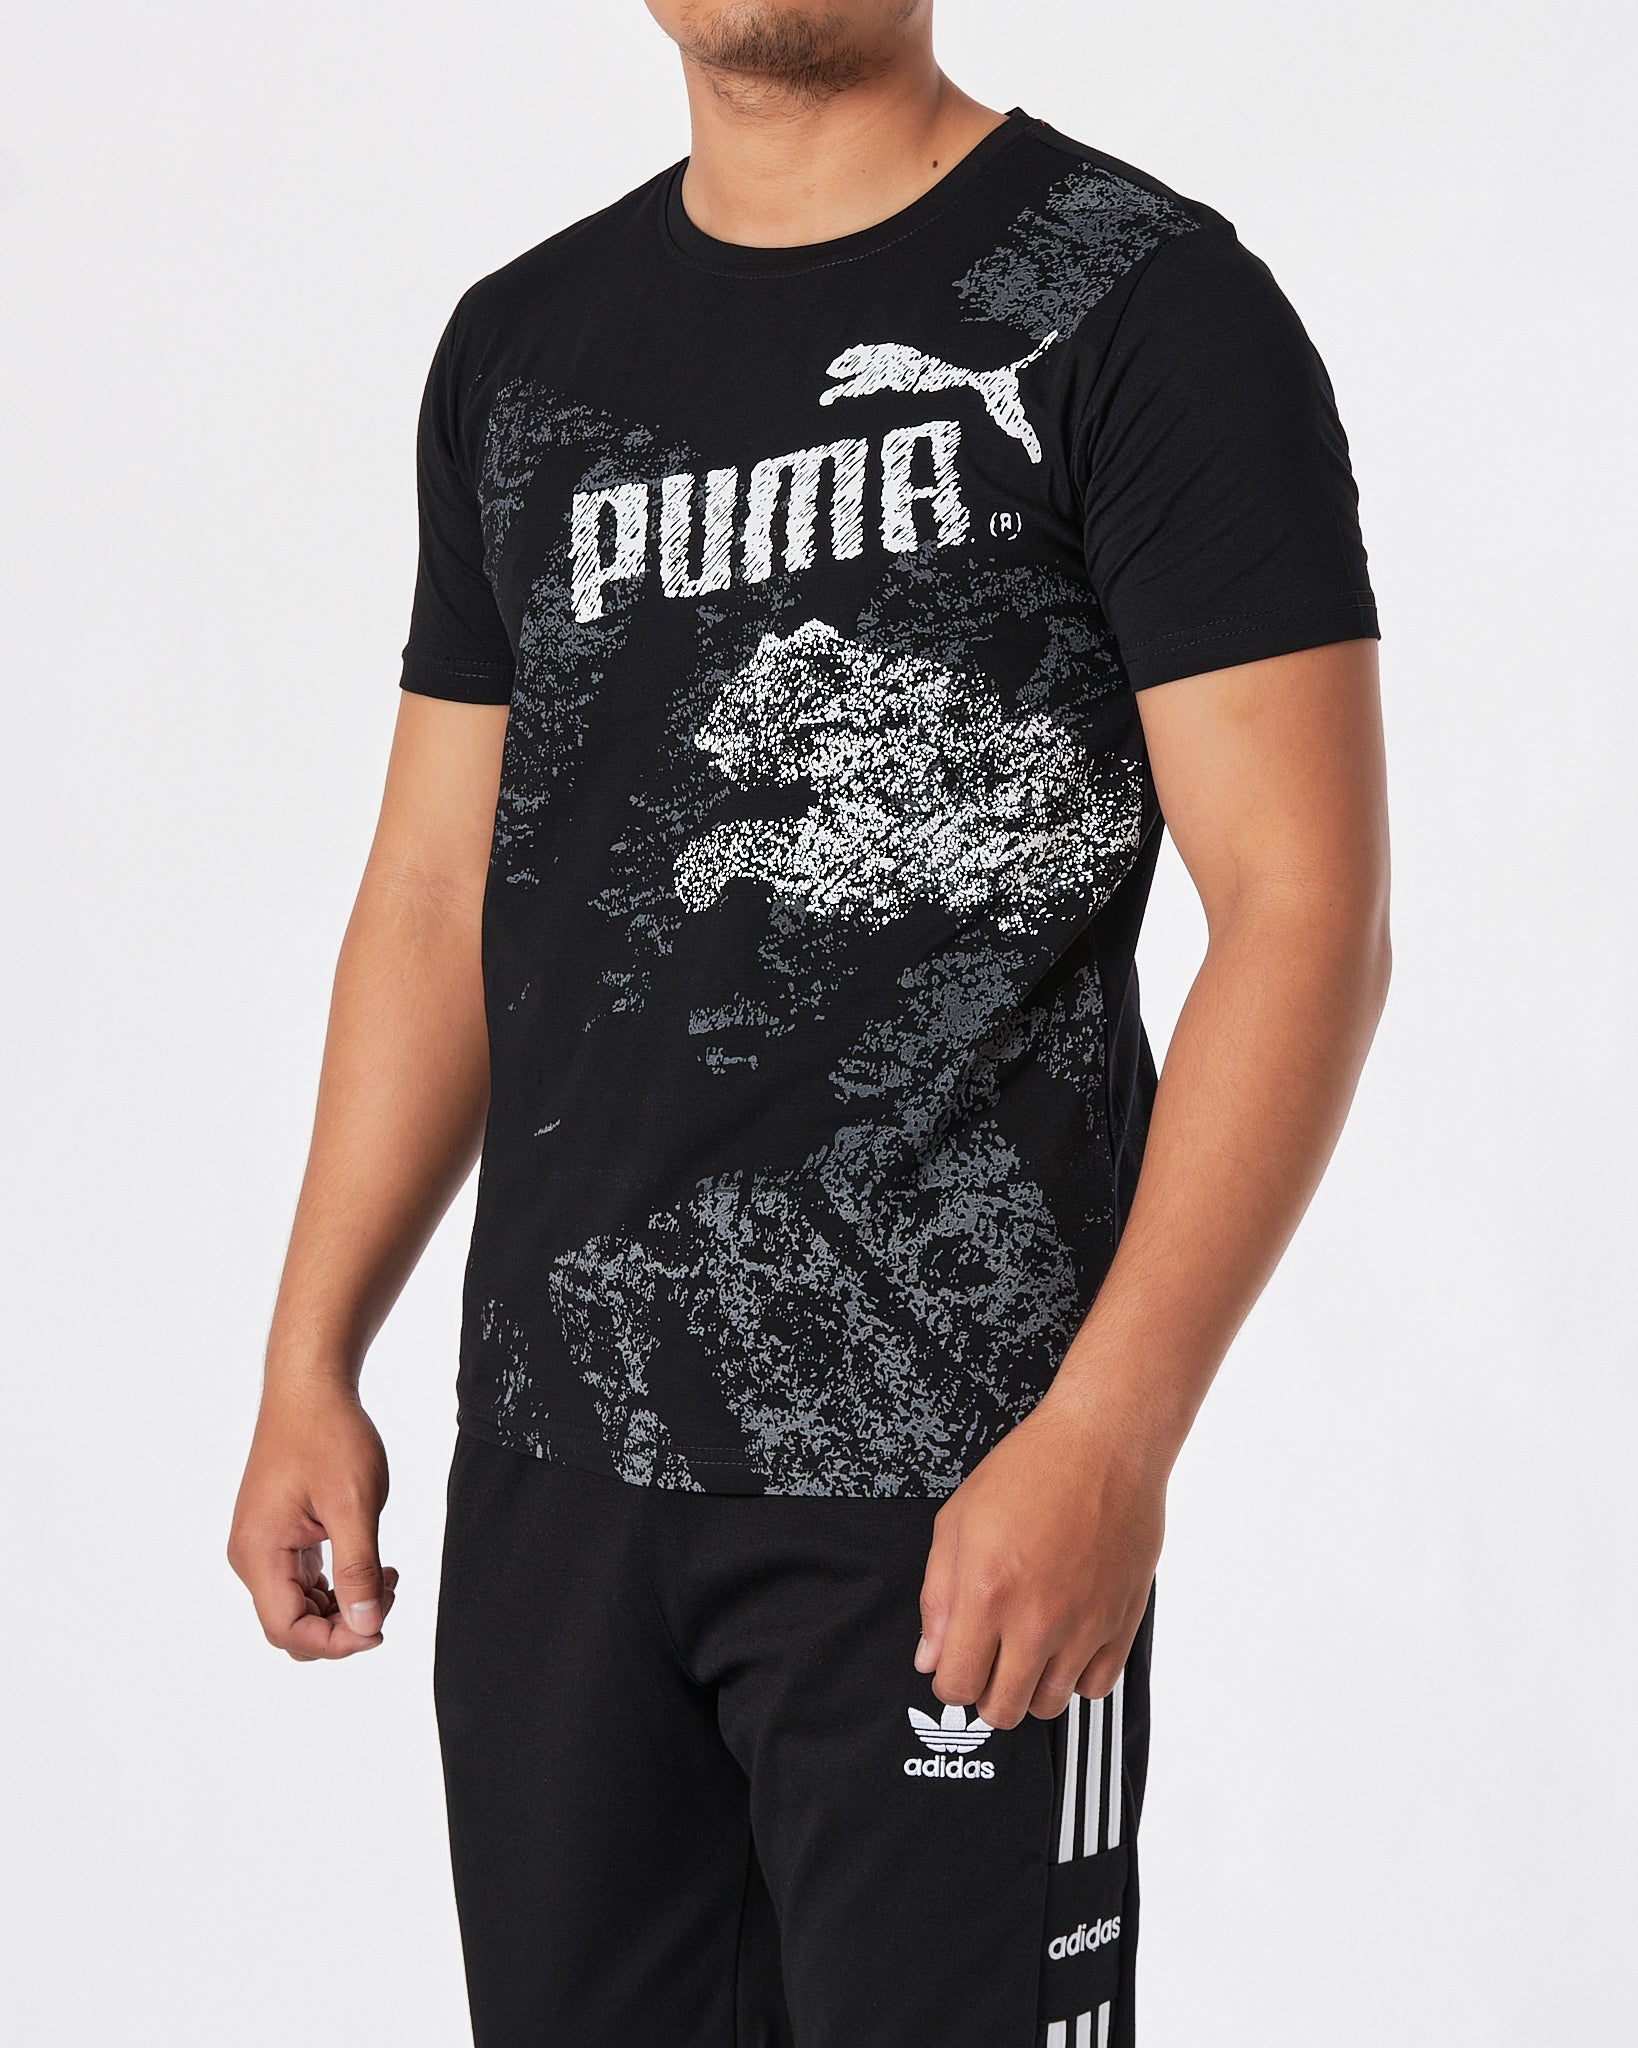 PUM Faded Color Men Black T-Shirt 14.90